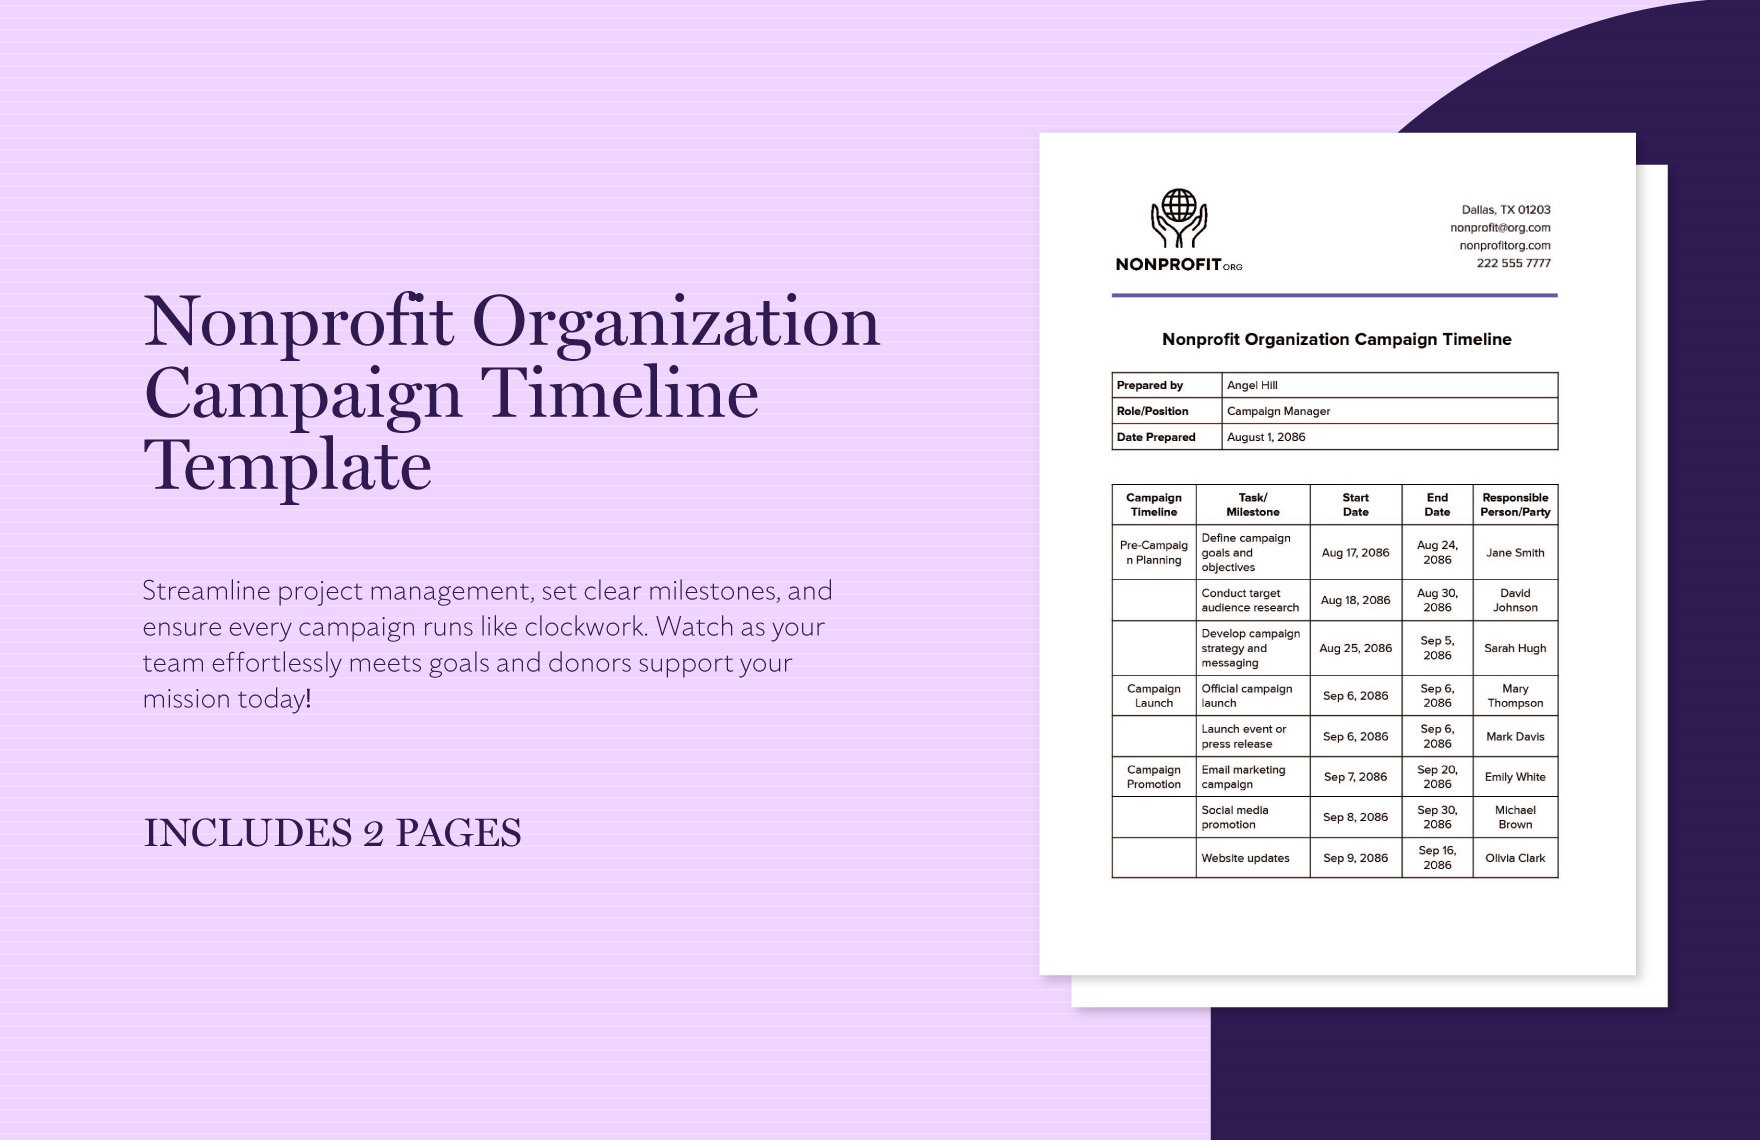 Nonprofit Organization Campaign Timeline Template in Word, Google Docs, PDF